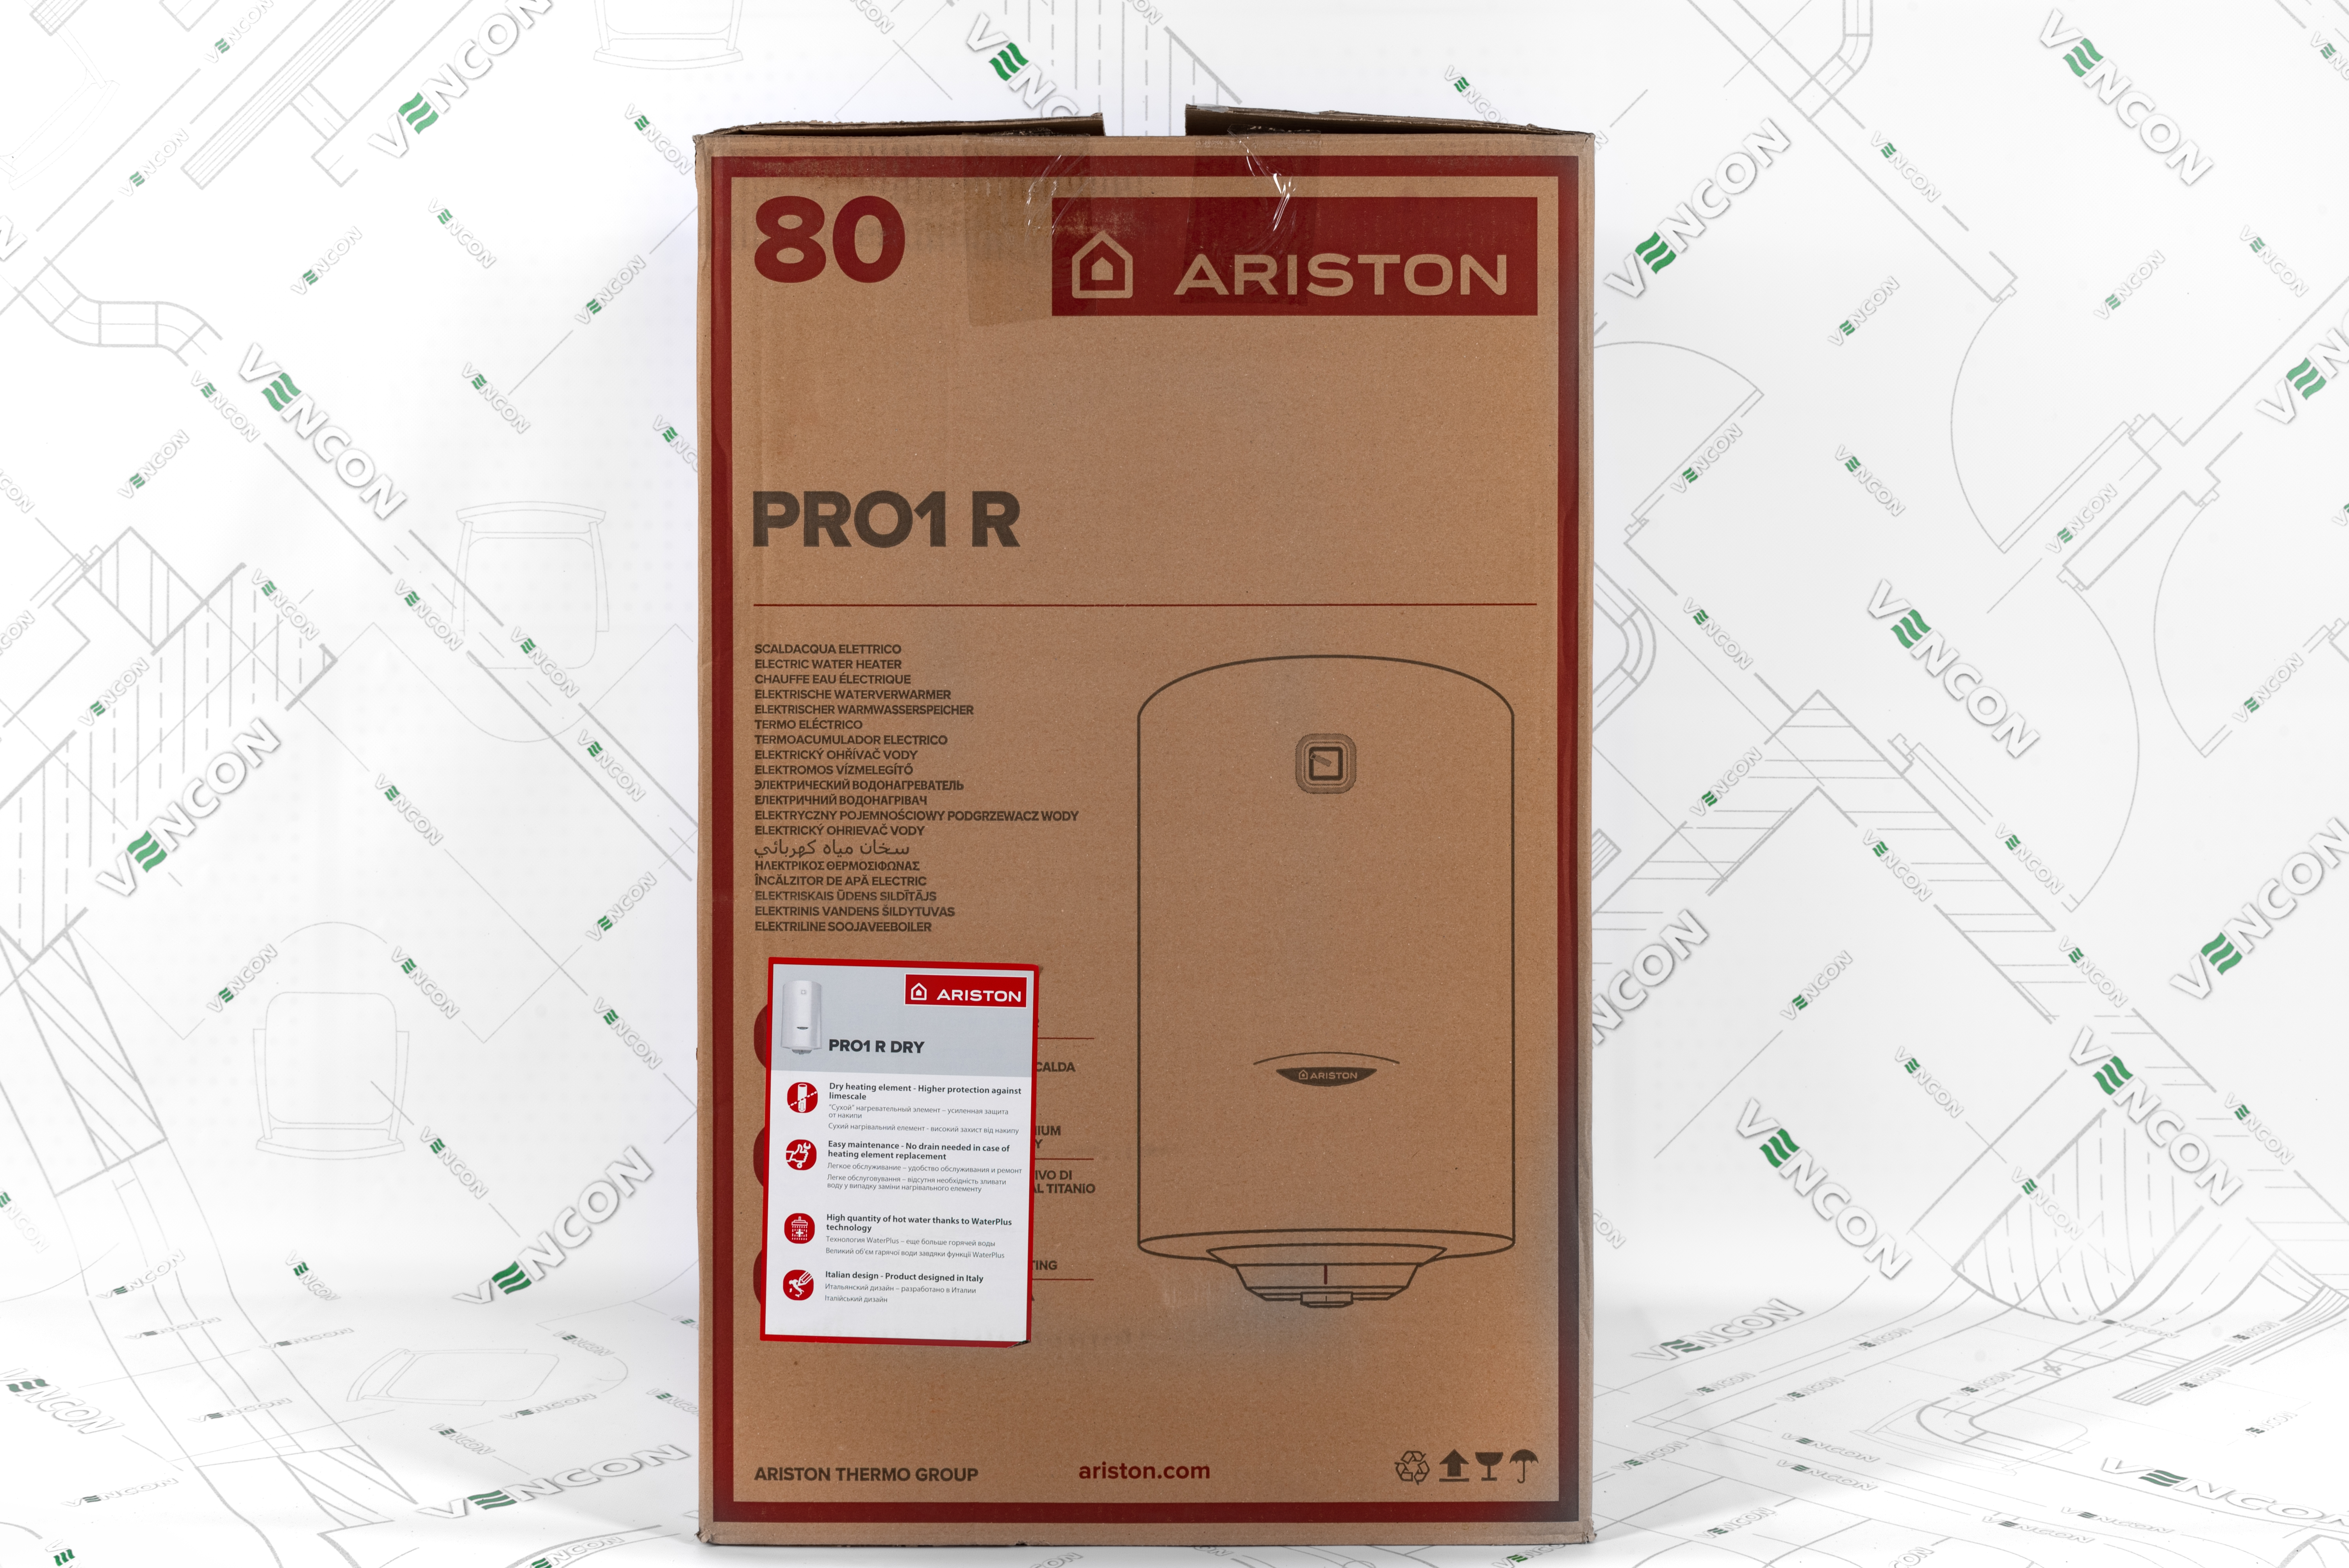 Ariston PRO1 R 80 V 1,5К PL Dry в магазине - фото 17